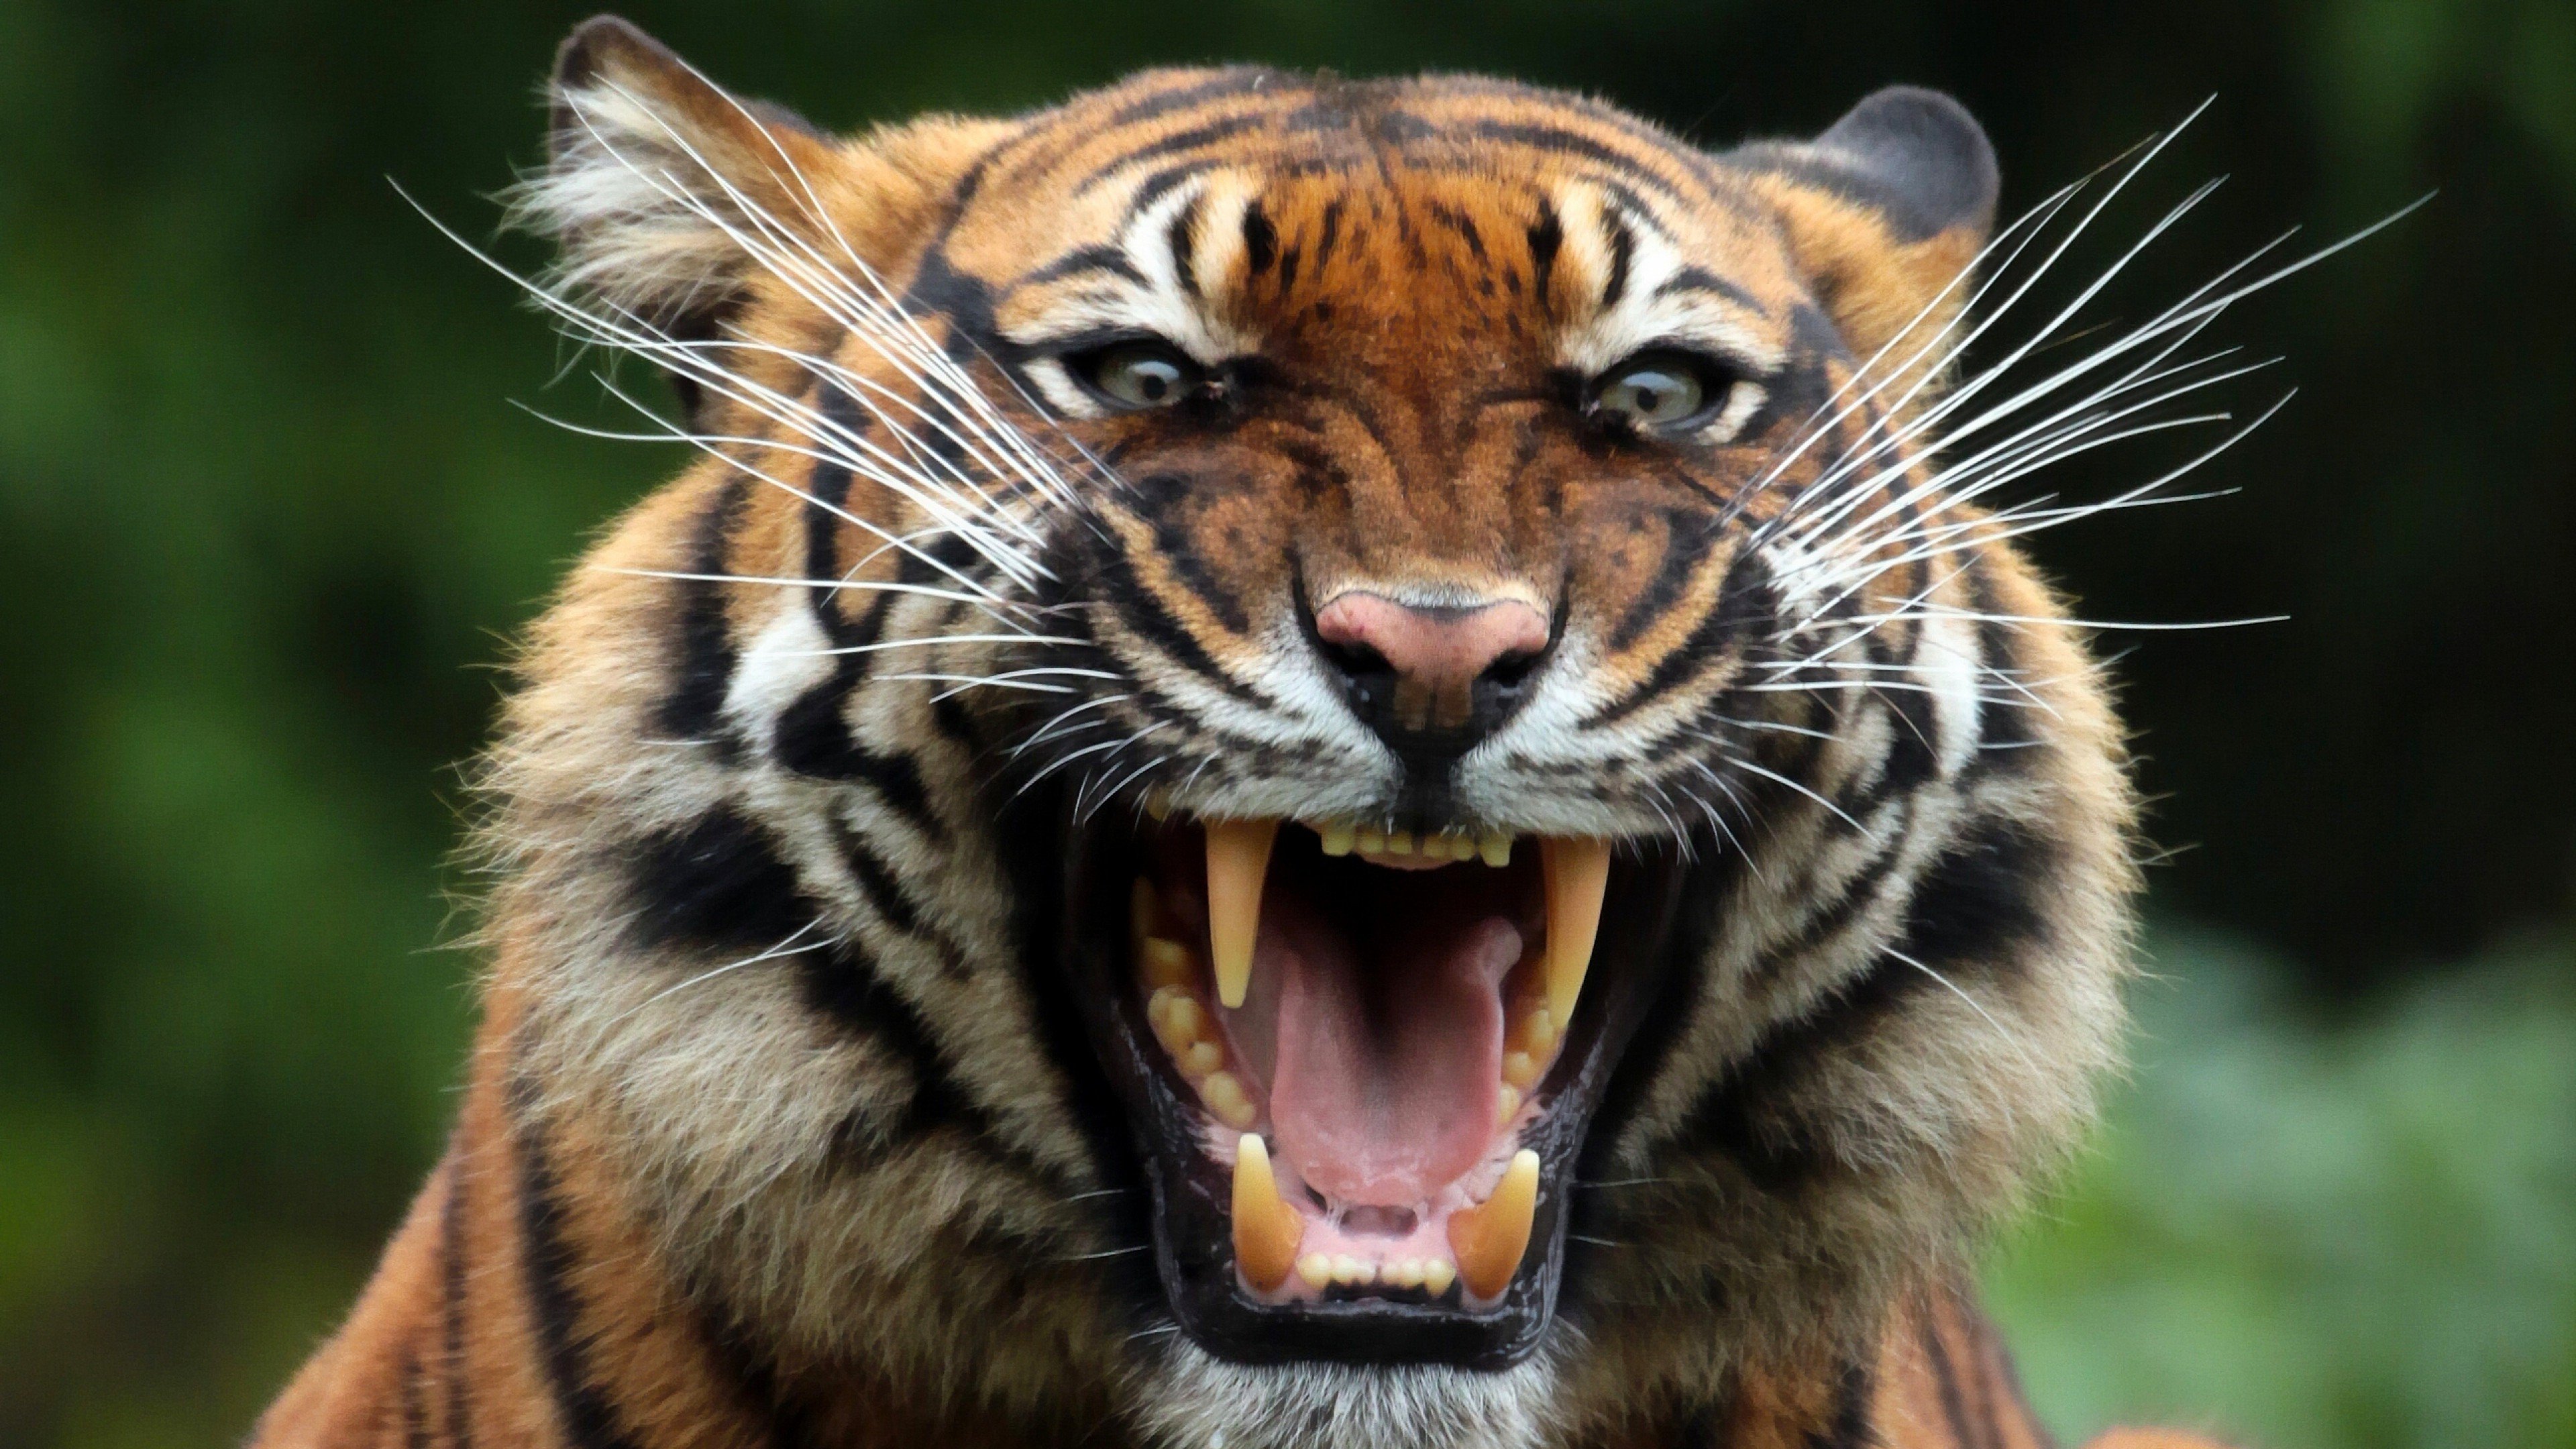 Wallpapers tiger fangs predator on the desktop